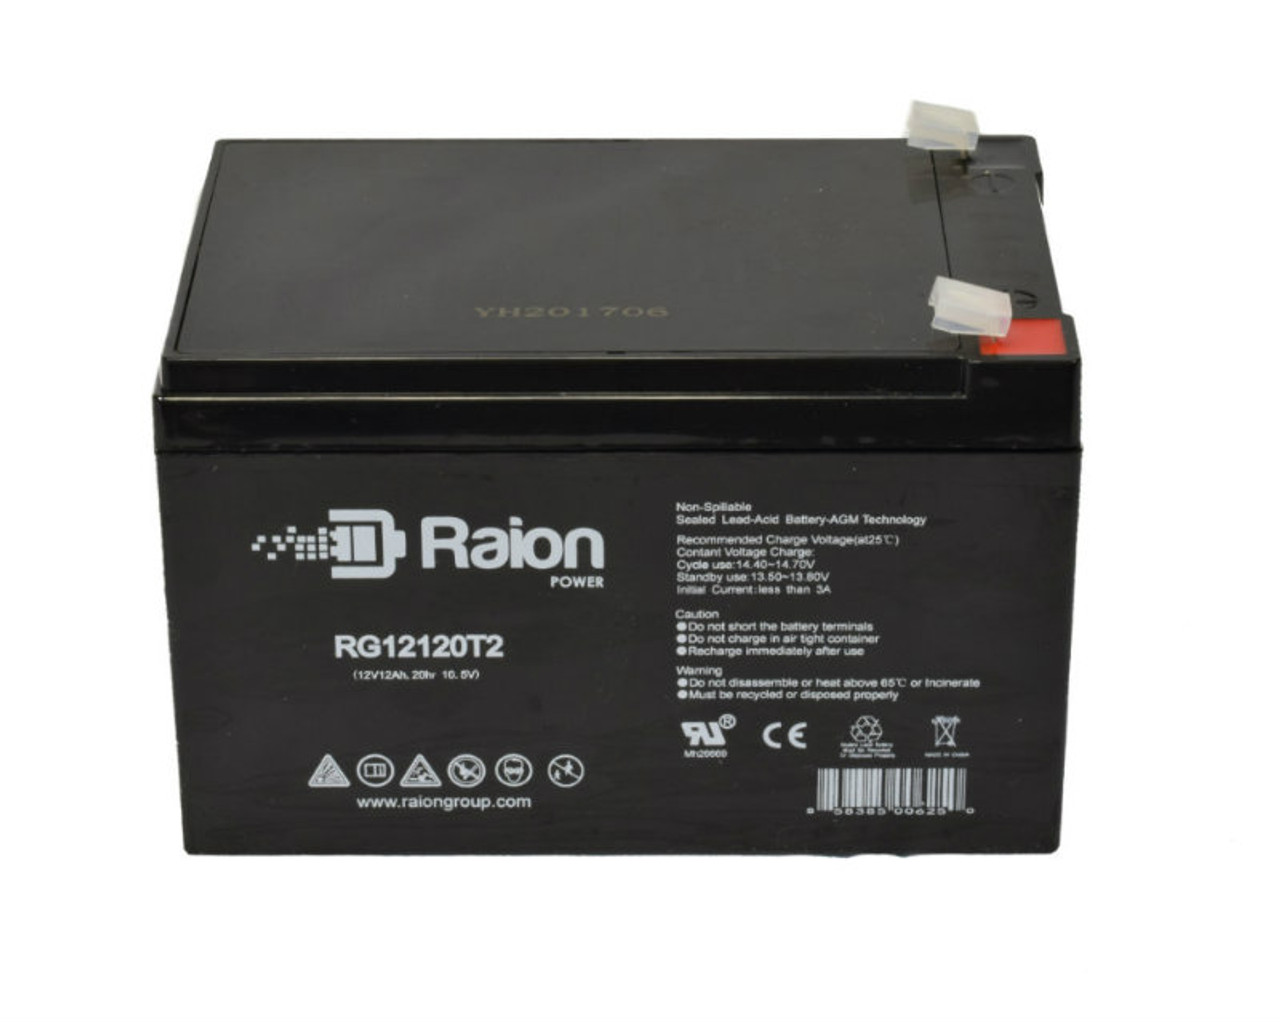 Raion Power RG12120T2 SLA Battery for OzCharge OCB-12-12